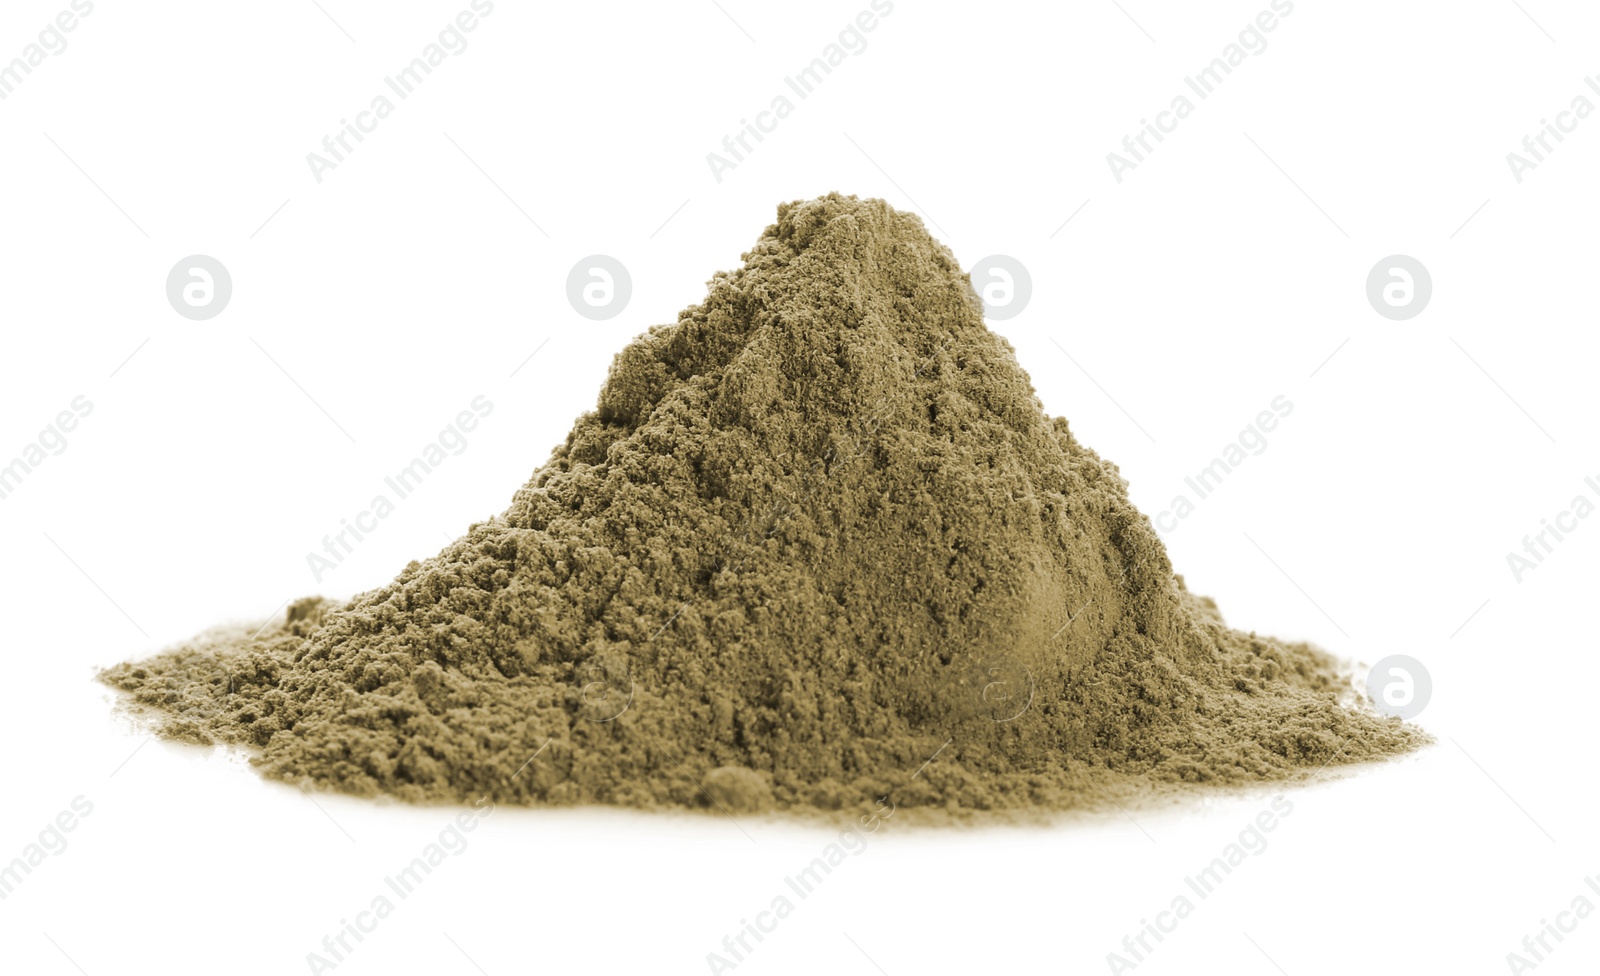 Photo of Heap of hemp protein powder on white background